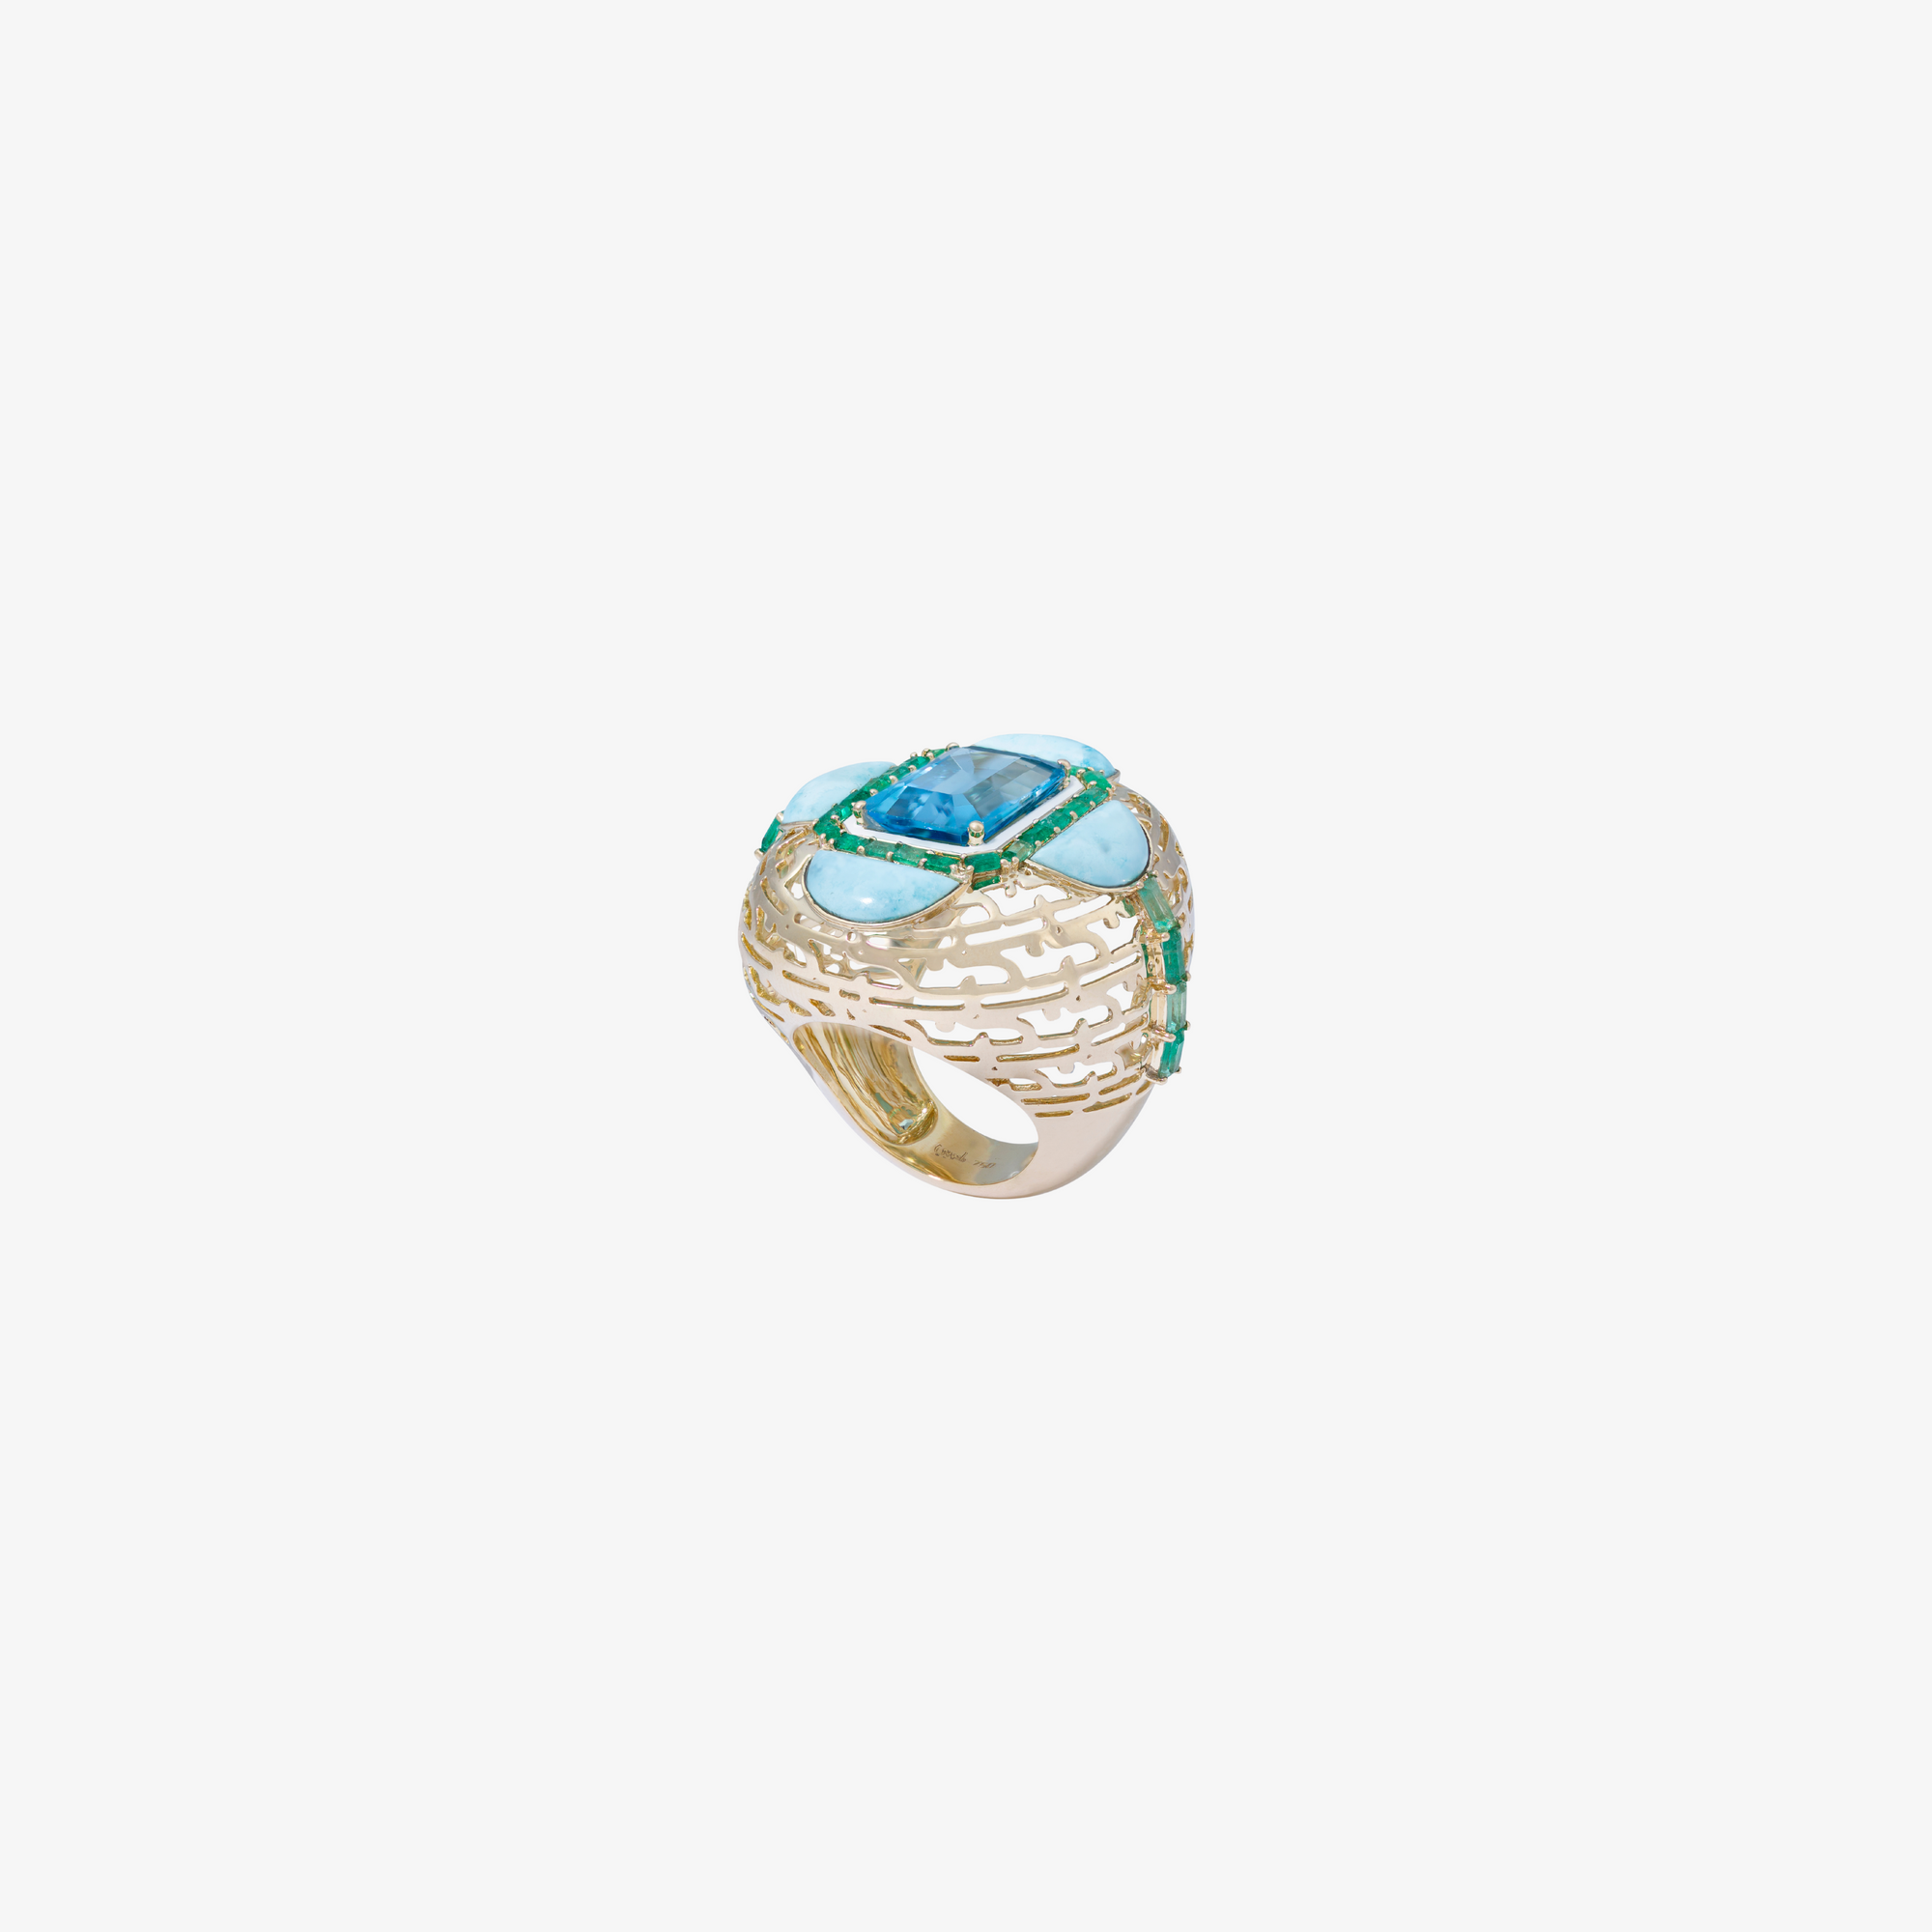 HAWA - 18K Gold, Turquoise, Aquamarine & Emerald Ring